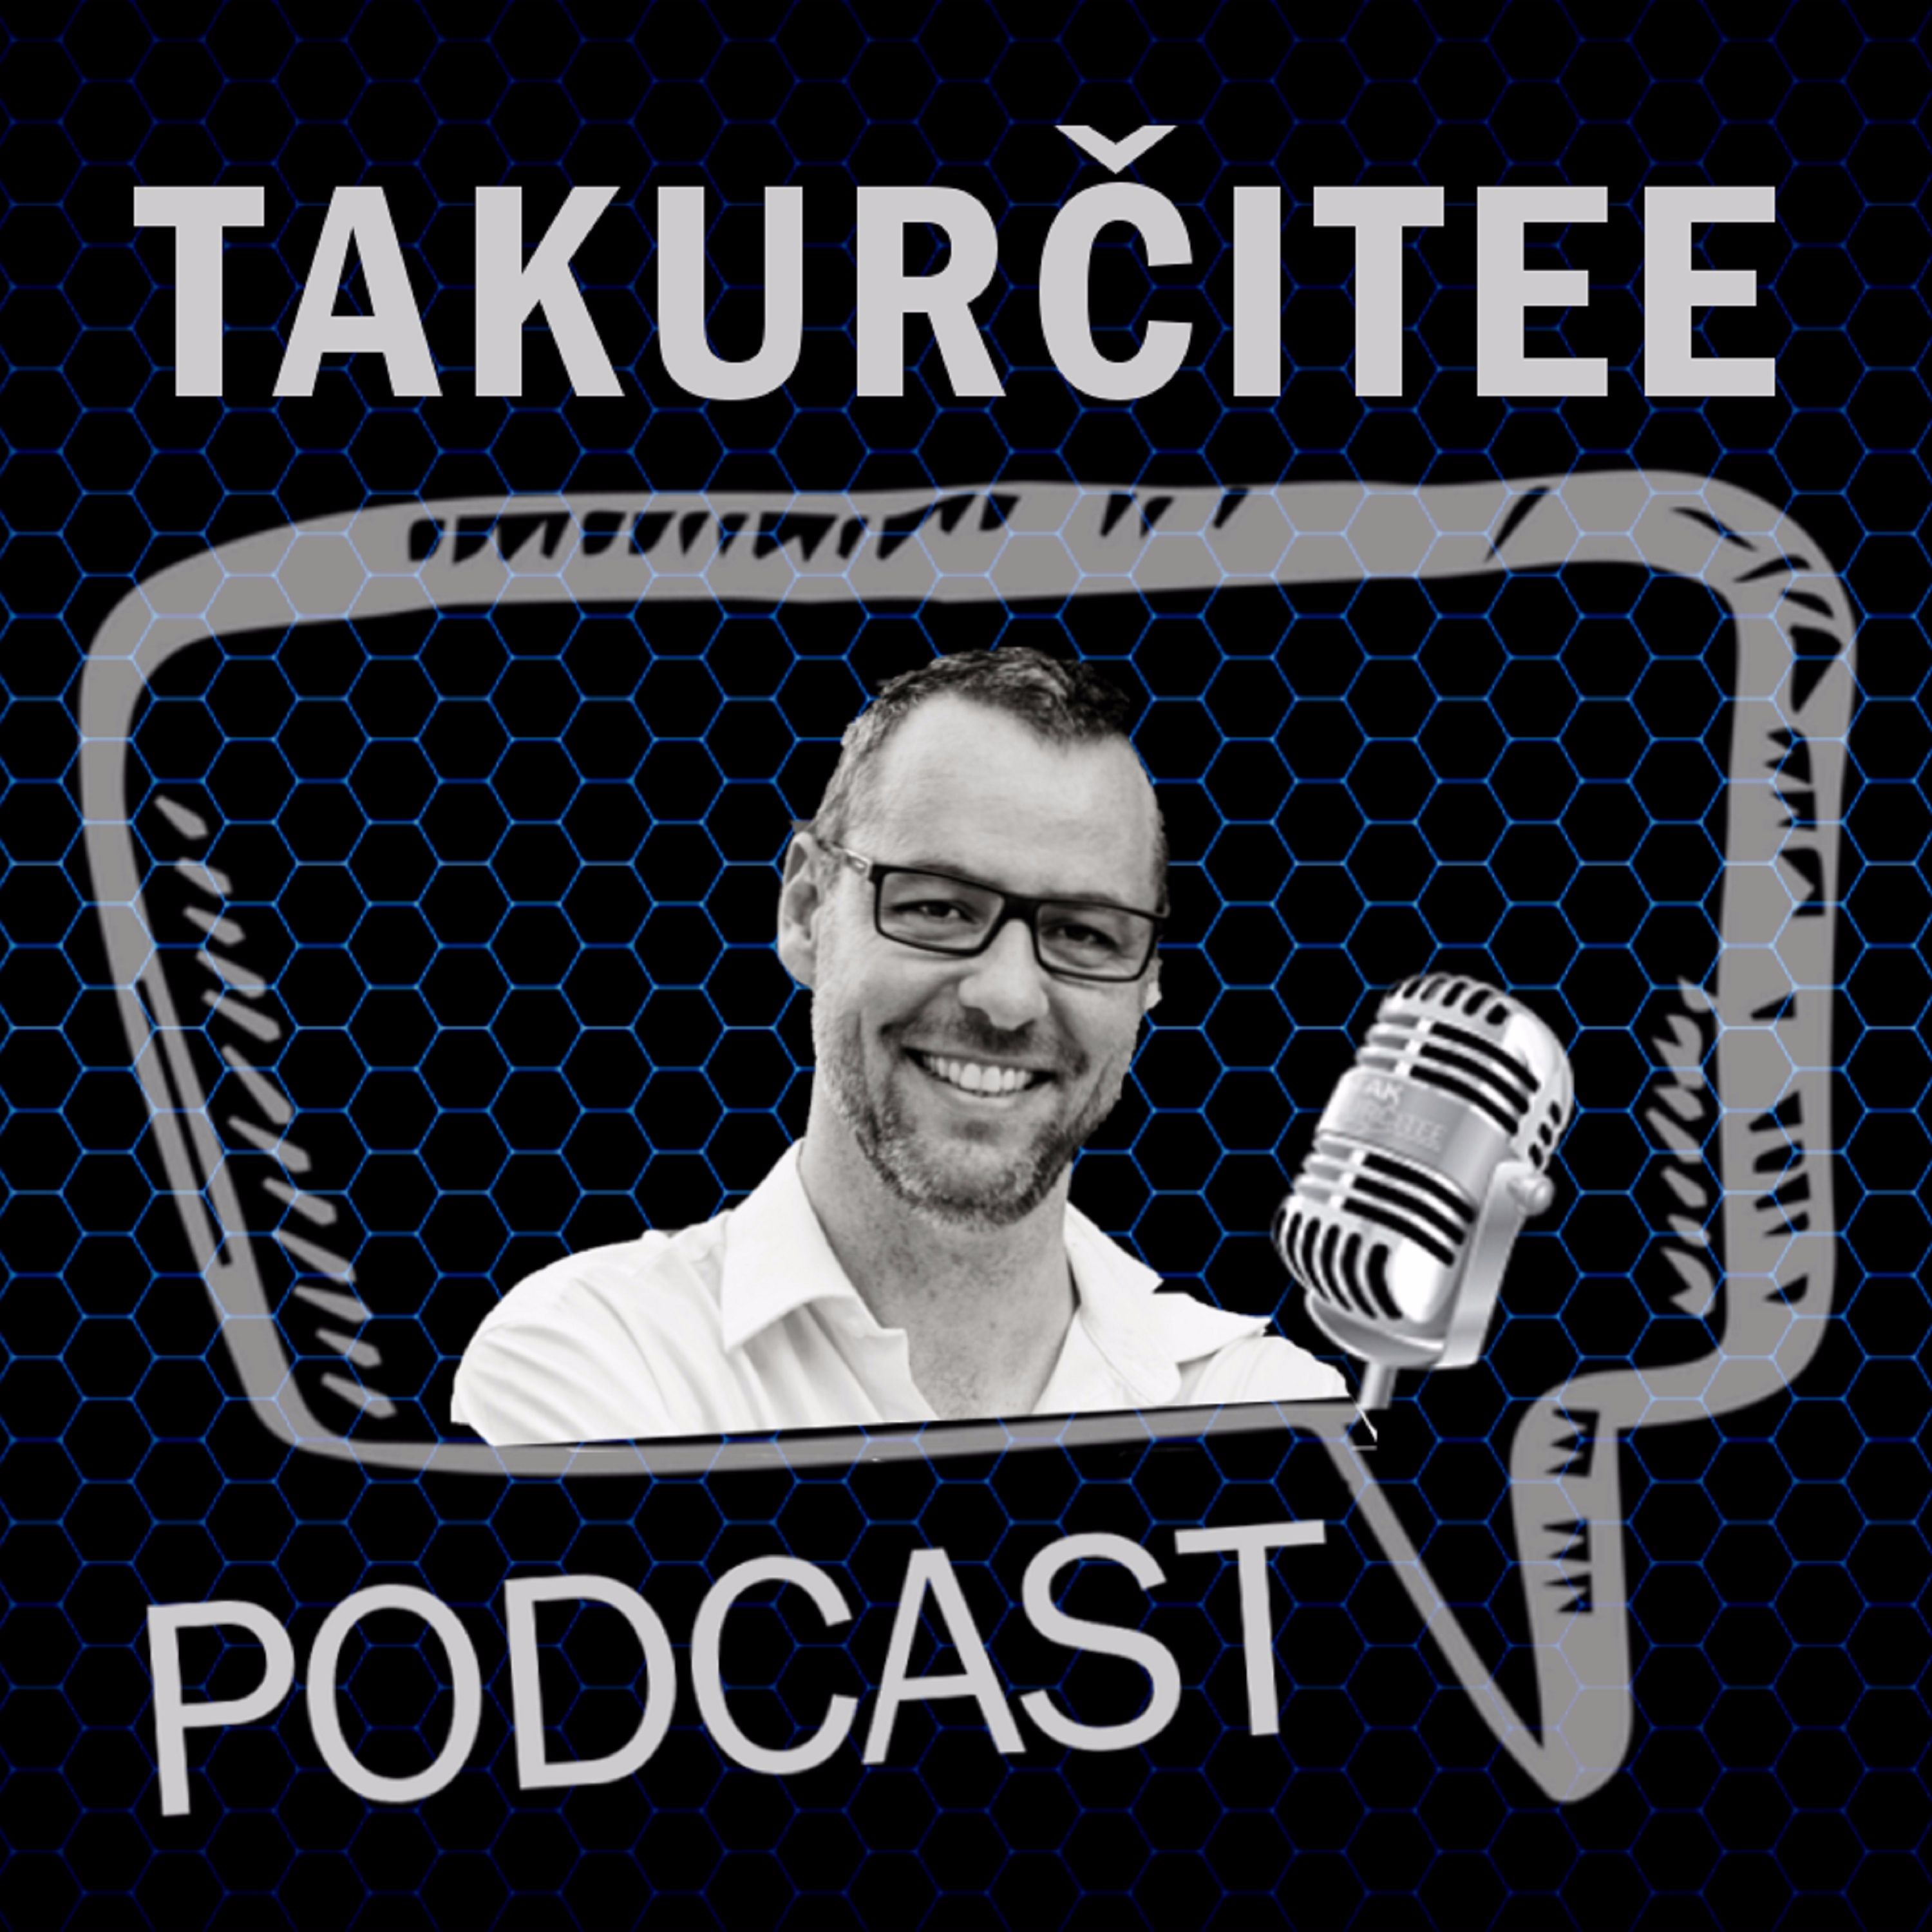 TakUrčitee Podcast, Ep. 40: Turnaj majsteriek, alebo WTF Singapur